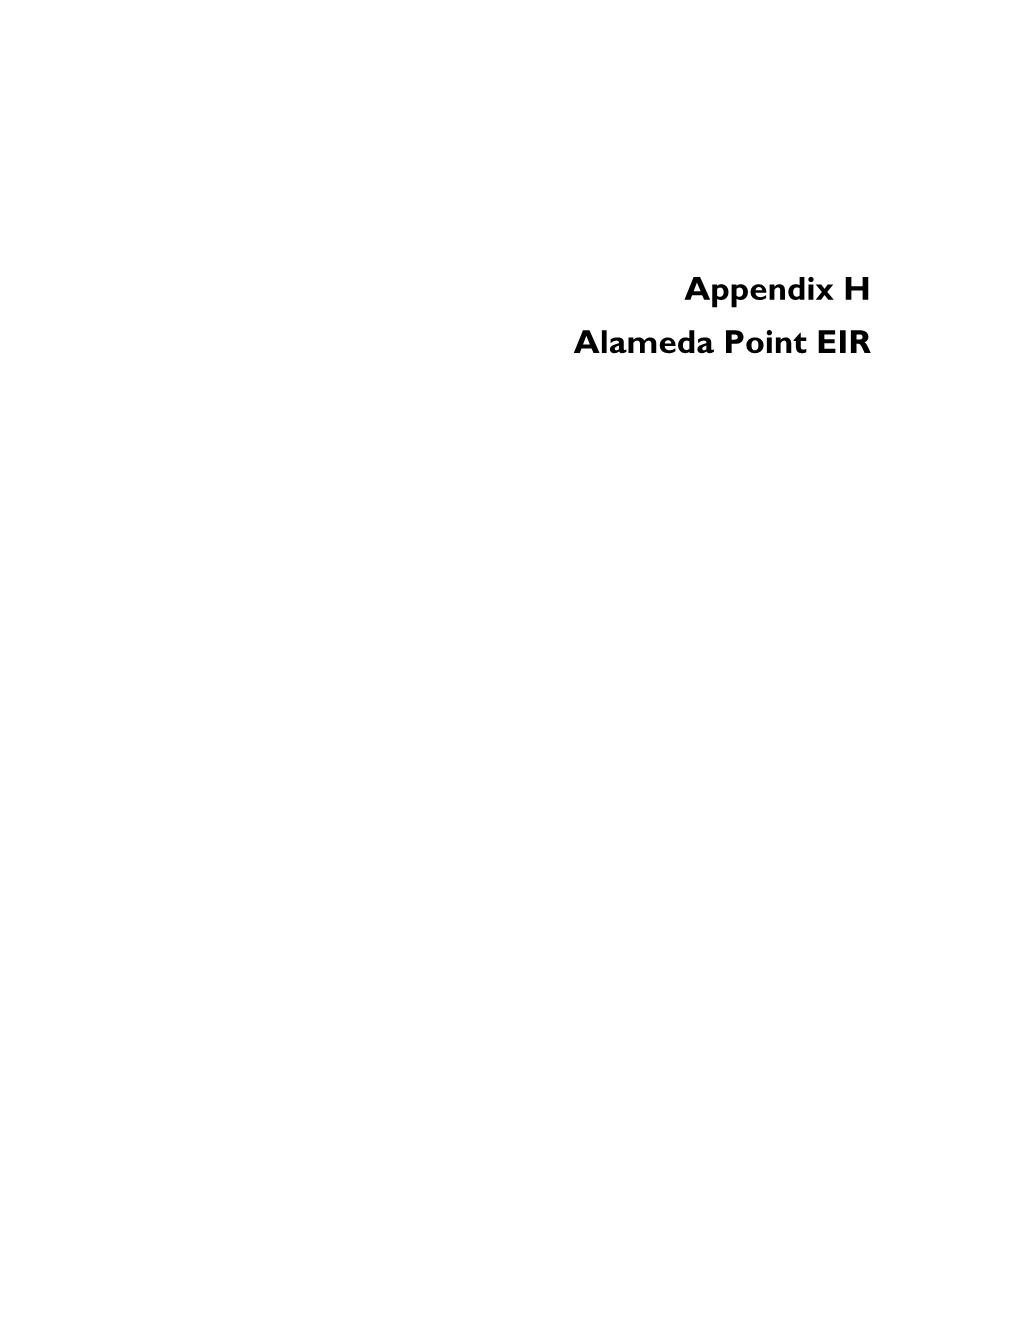 Alameda Point Draft